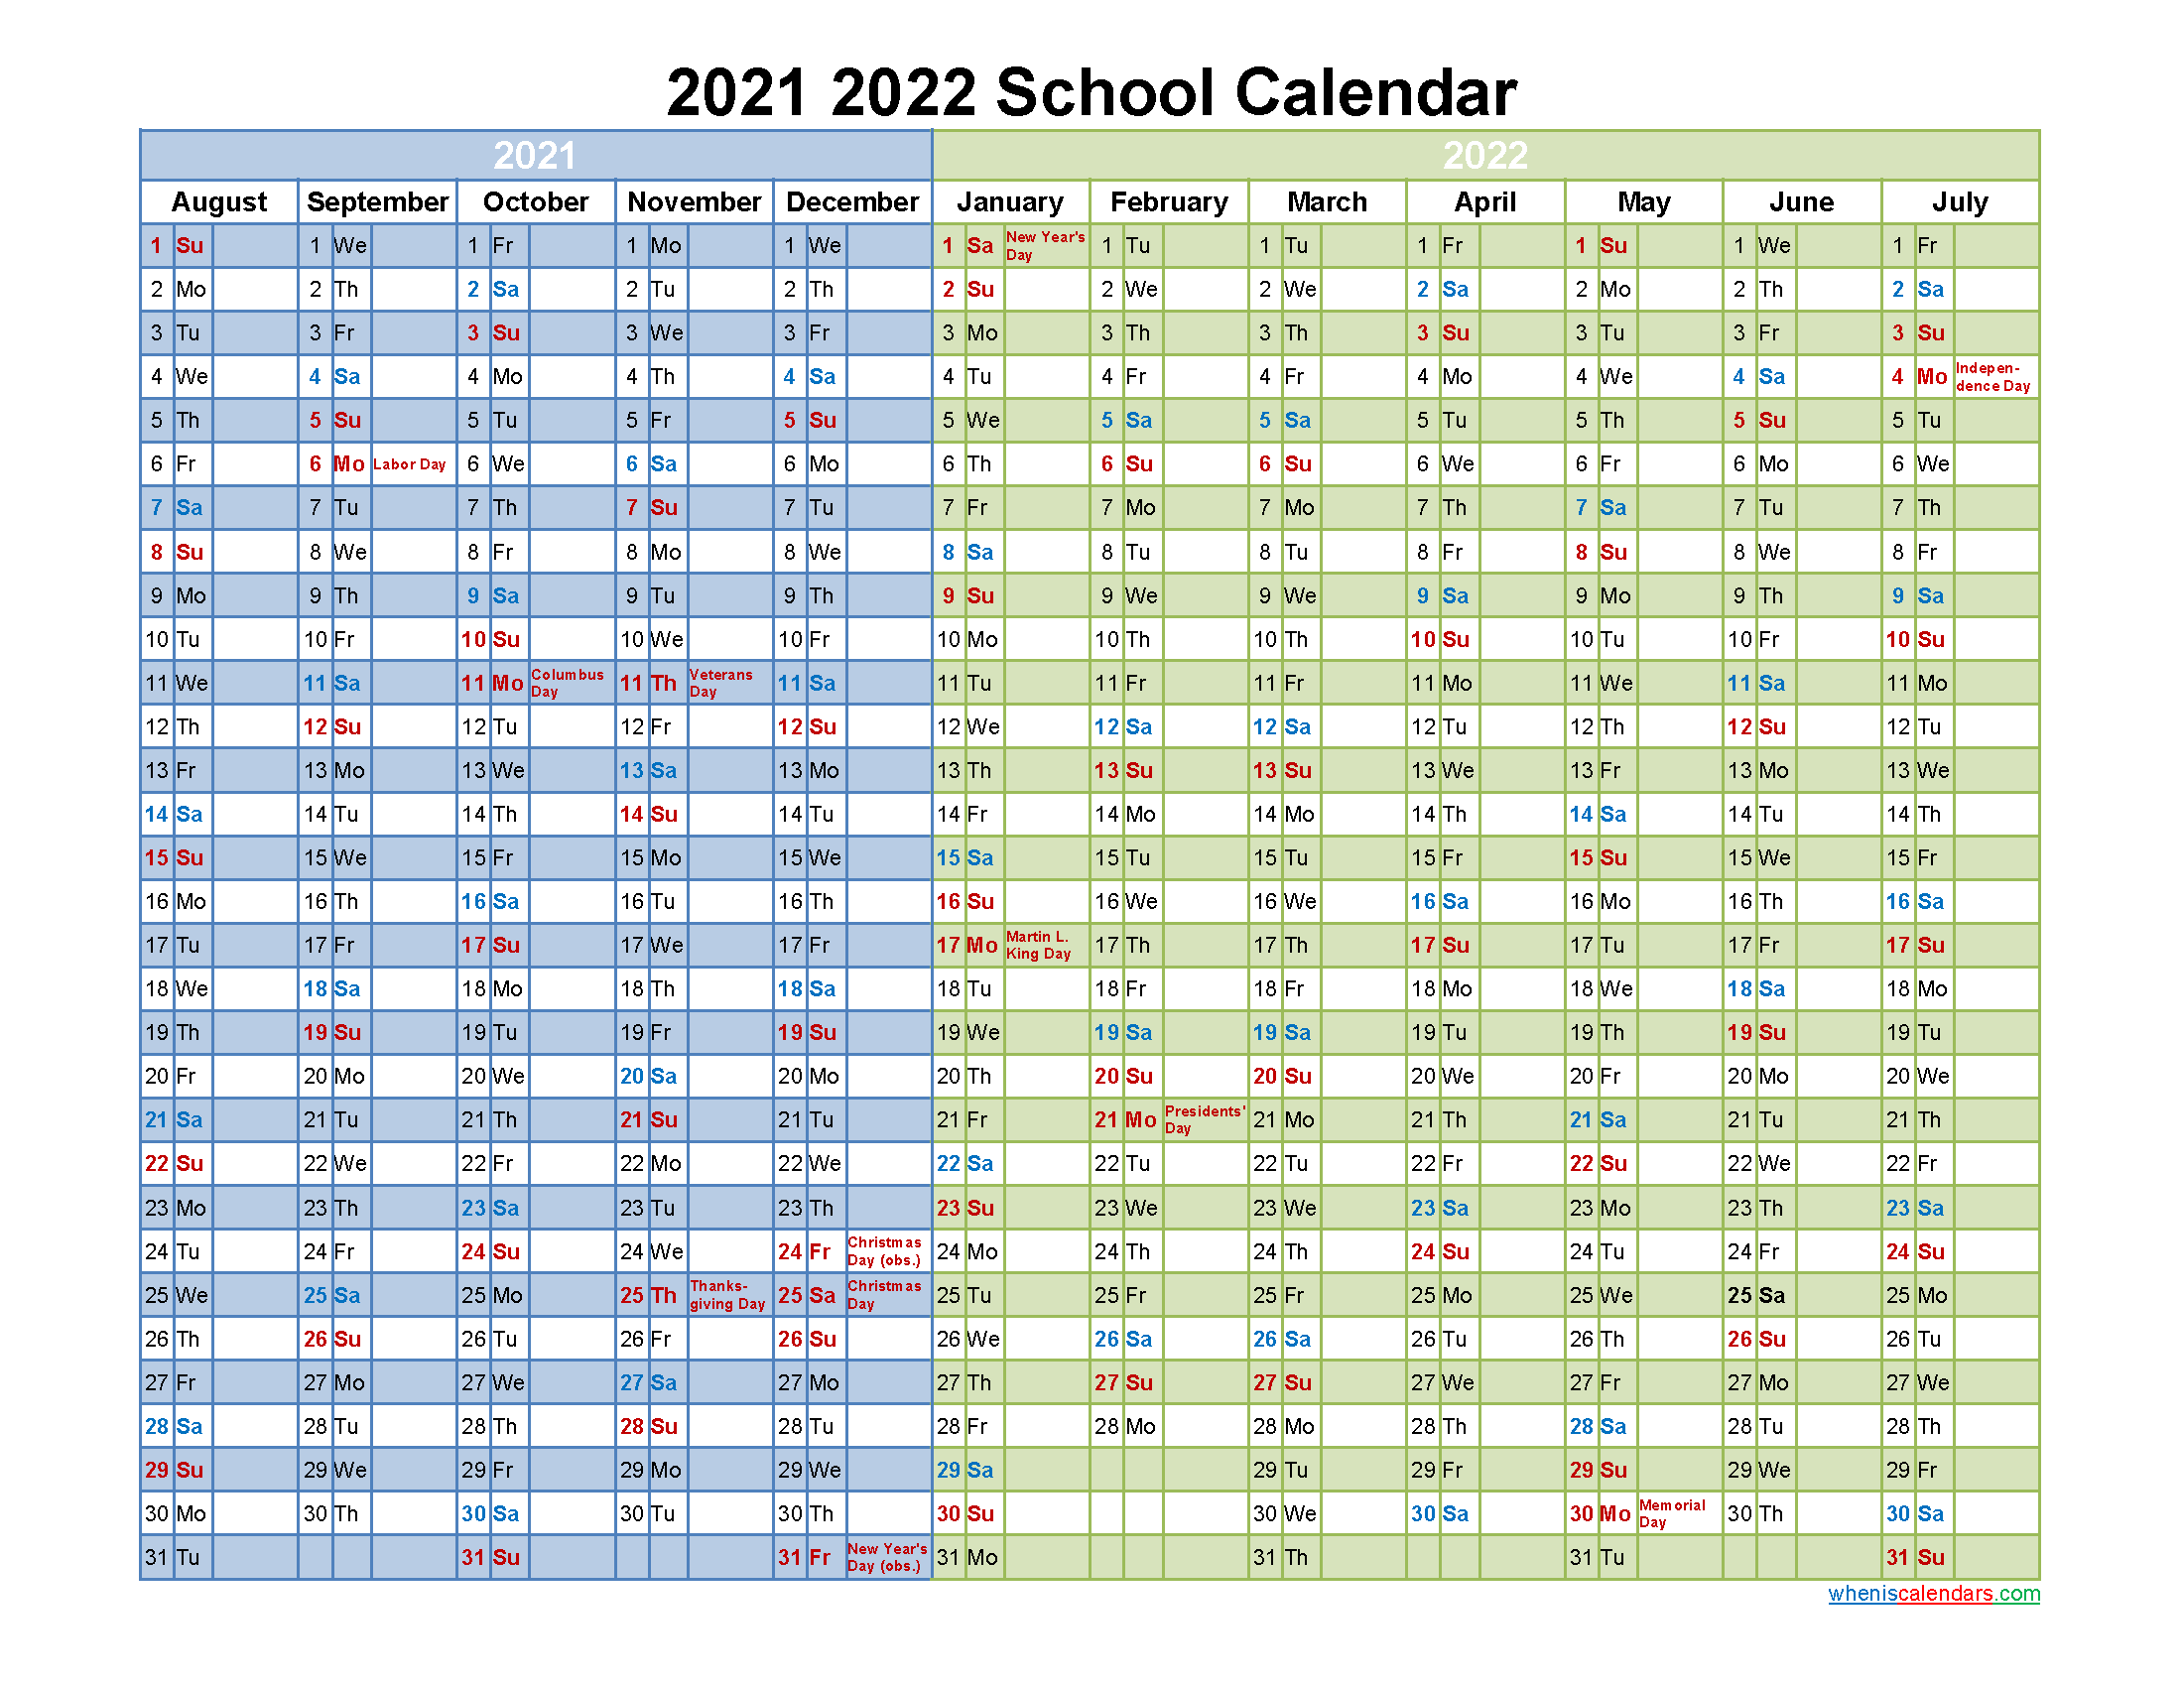 2021 and 2022 School Calendar Printable - Template No.22scl51